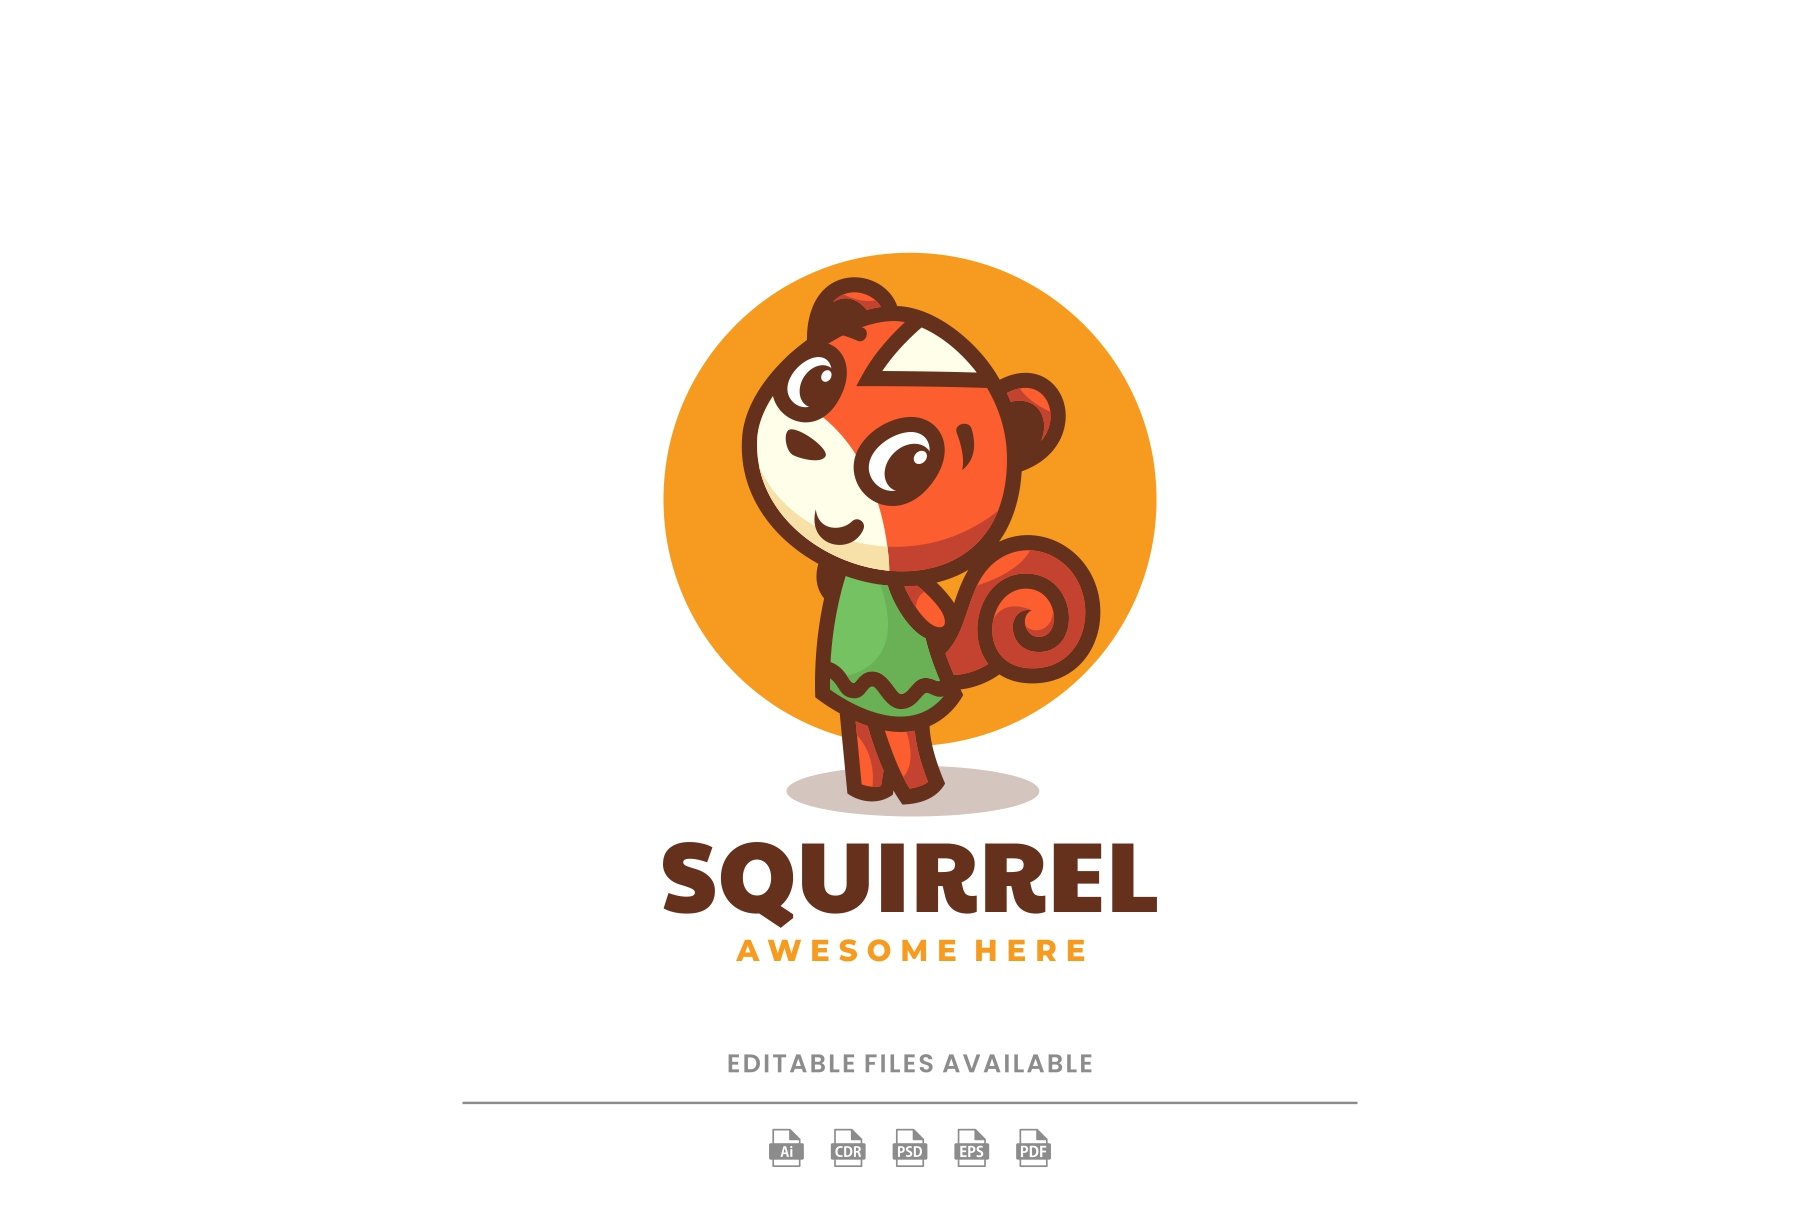 Squirrel Simple Mascot Logo cover image.